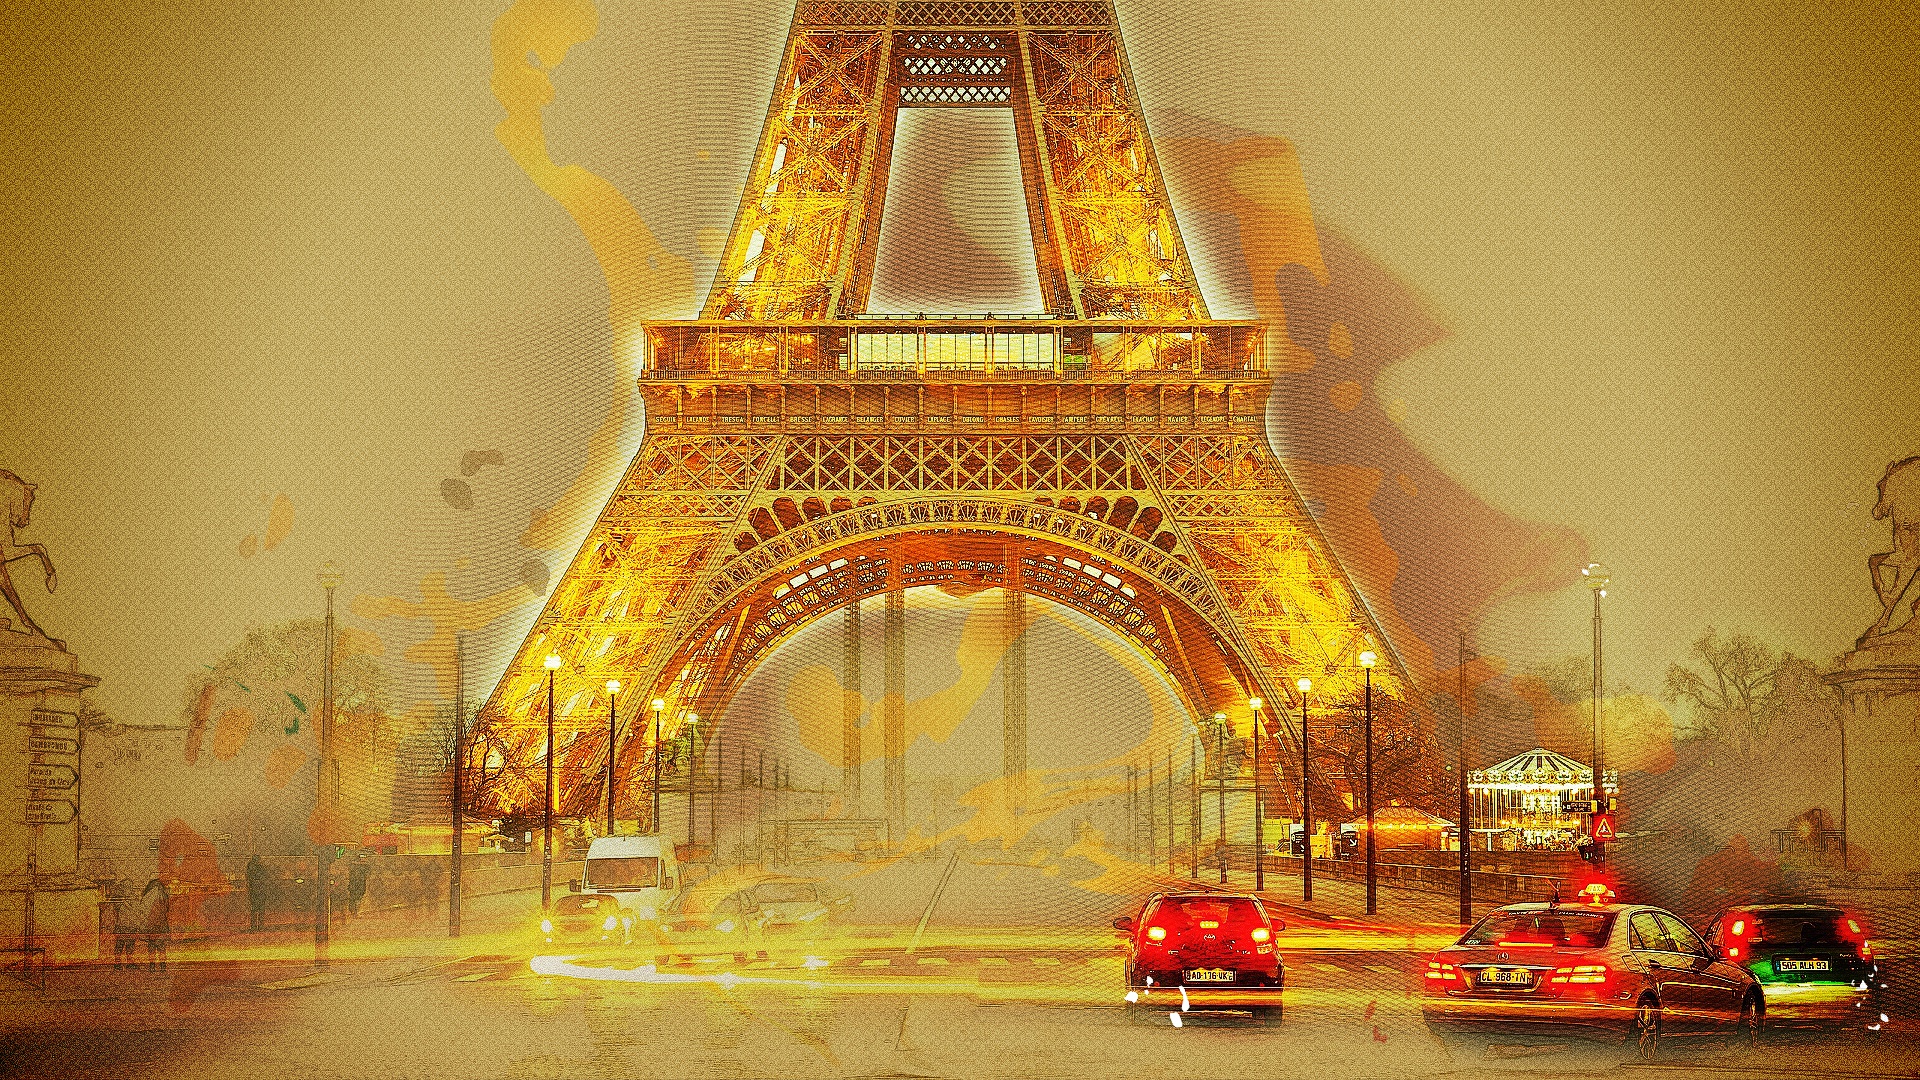 General 1920x1080 Paris France Eiffel Tower city car traffic artwork Europe landmark digital art